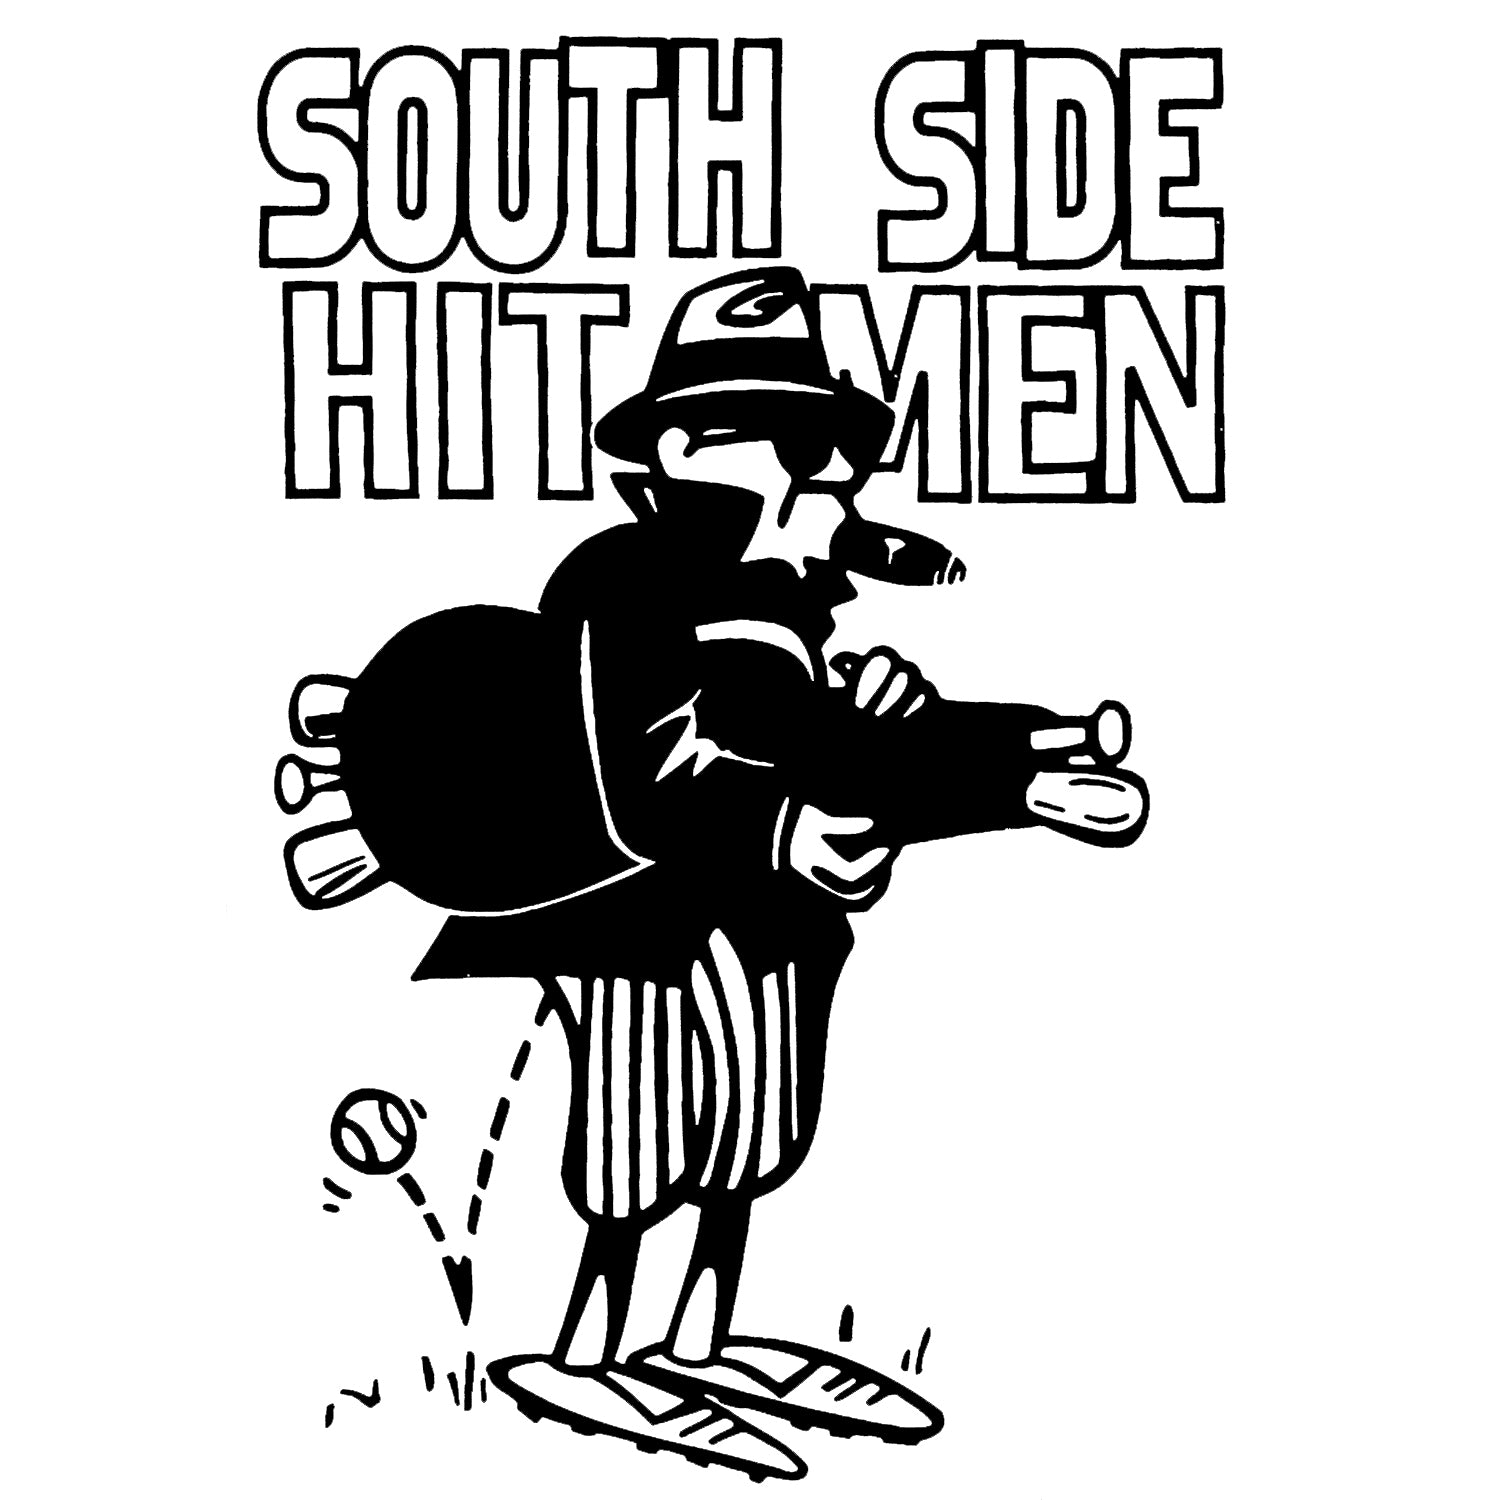 Chicago White Sox Southside Bring it home 2021 Postseason shirt